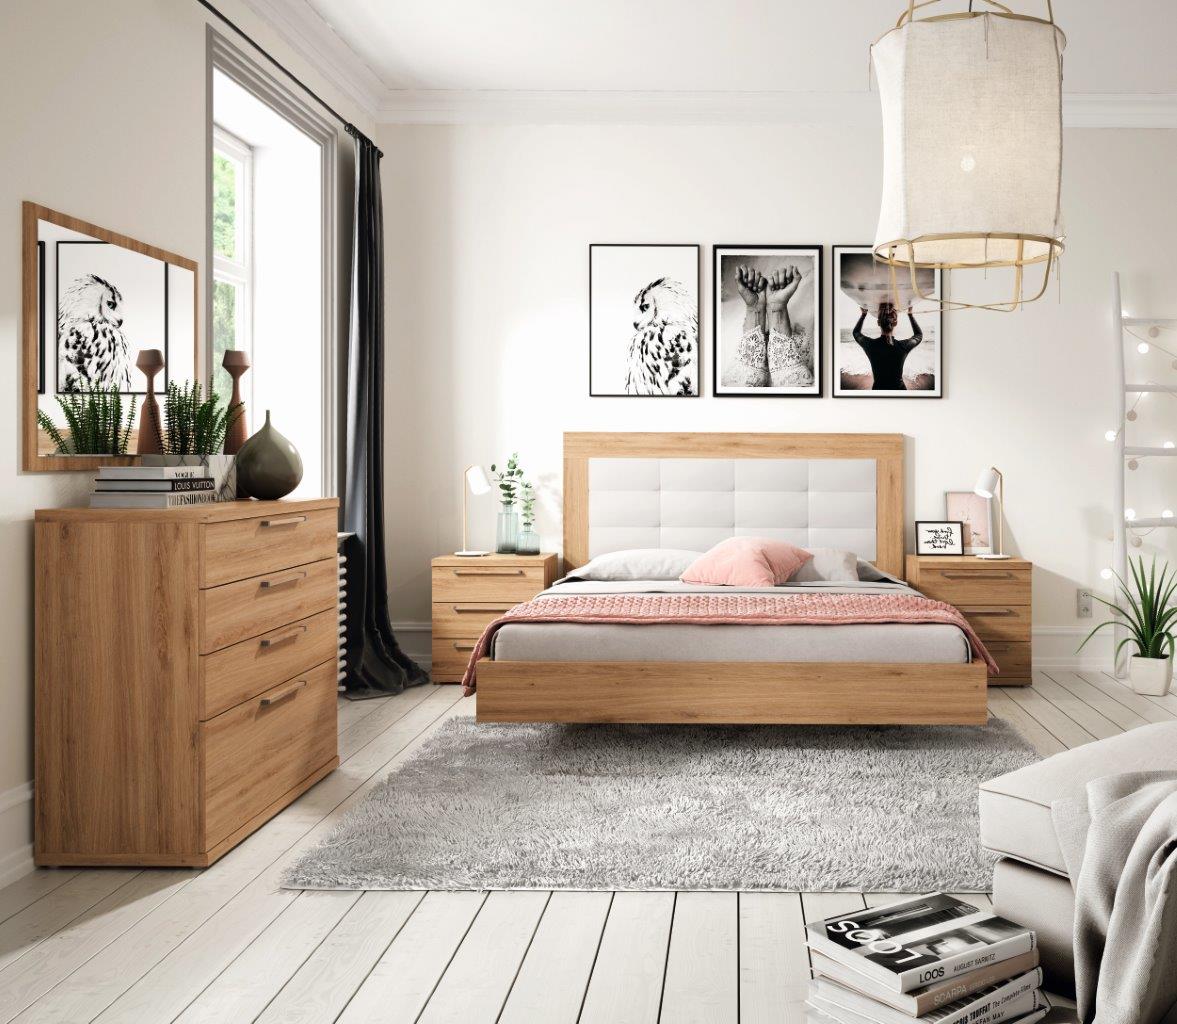 mueble-dormitorio-cama-mesita  -comoda-madera-melamina-moderno-economico-roble-blanco-muebles-ramis-157-kronos  - Muebles Ramis